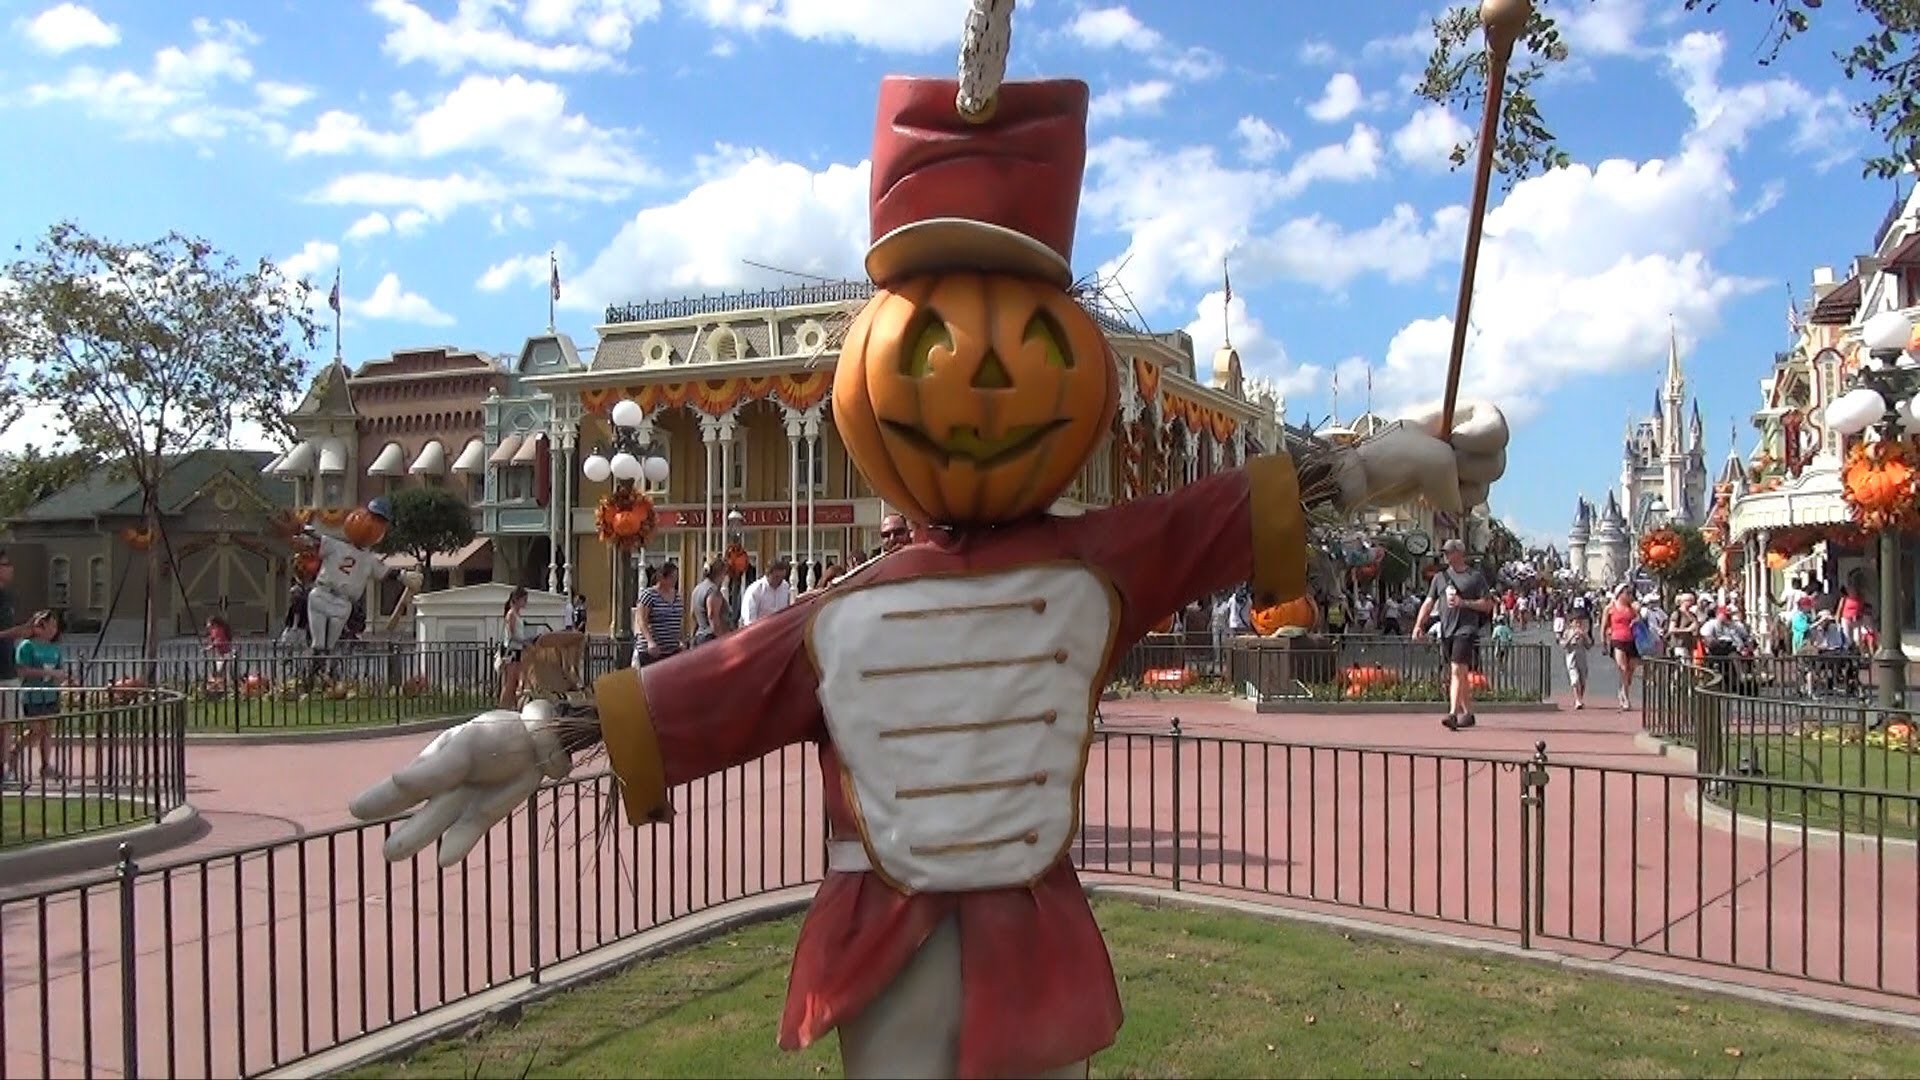 1920x1080 Halloween Decorations at the Magic Kingdom 2013 - Scarecrows, Pumpkins,  Walt Disney World